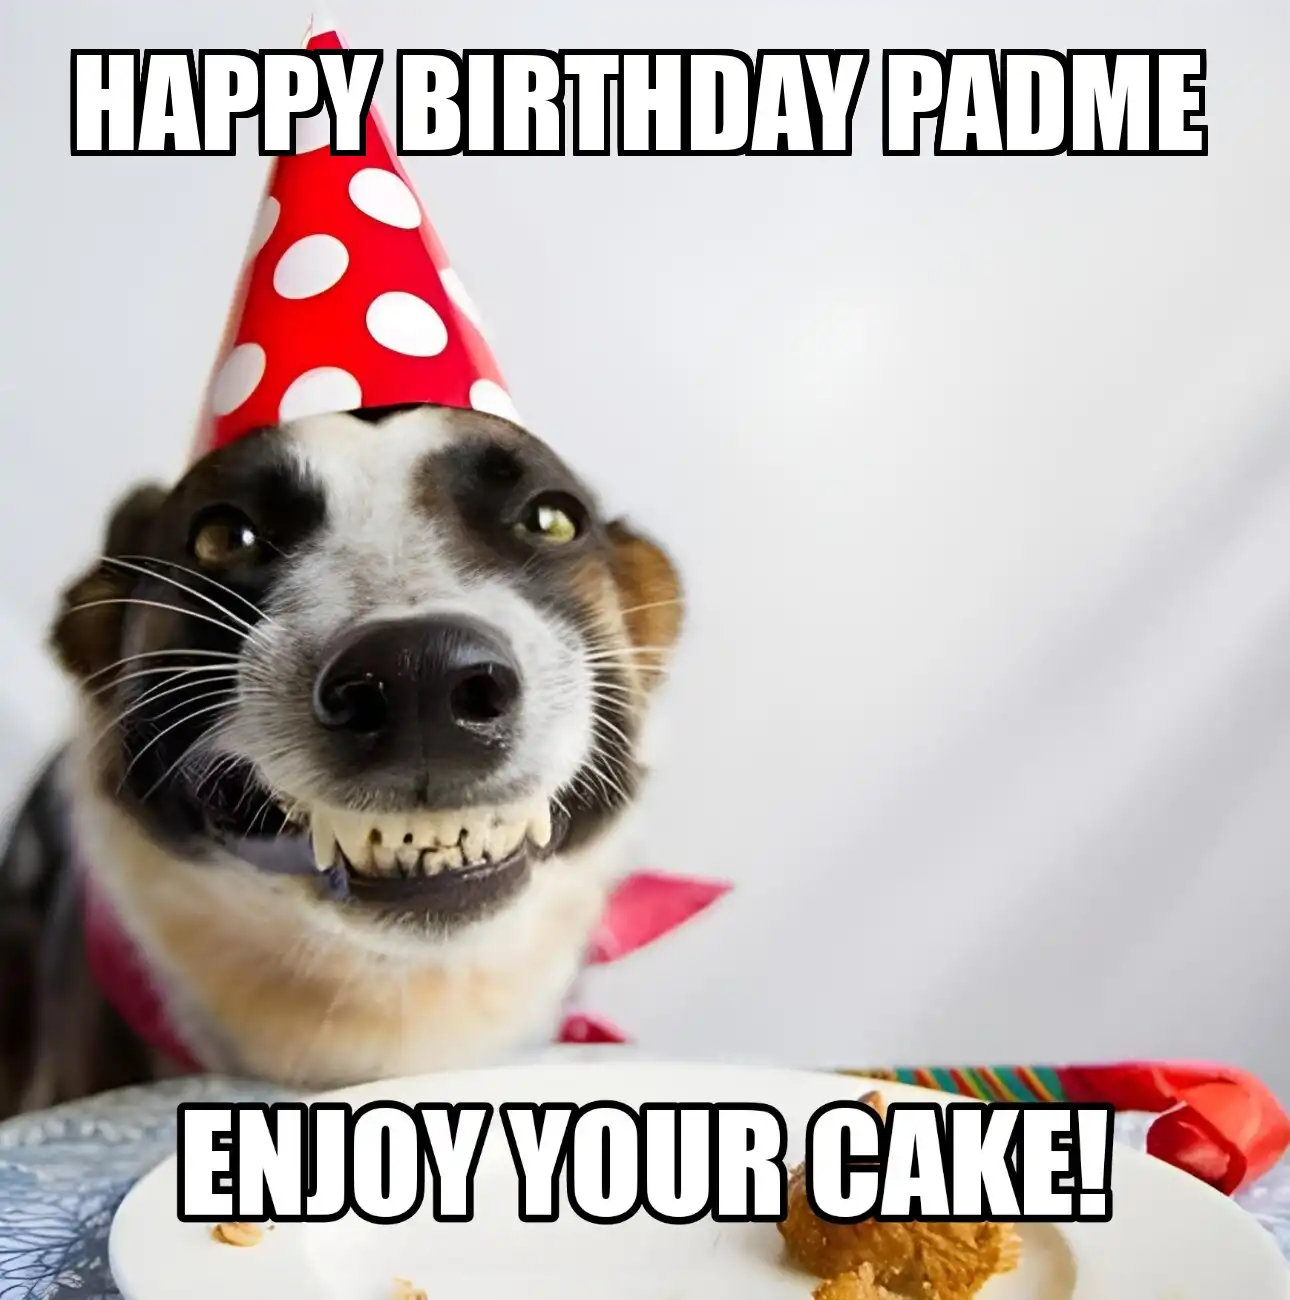 Happy Birthday Padme Enjoy Your Cake Dog Meme